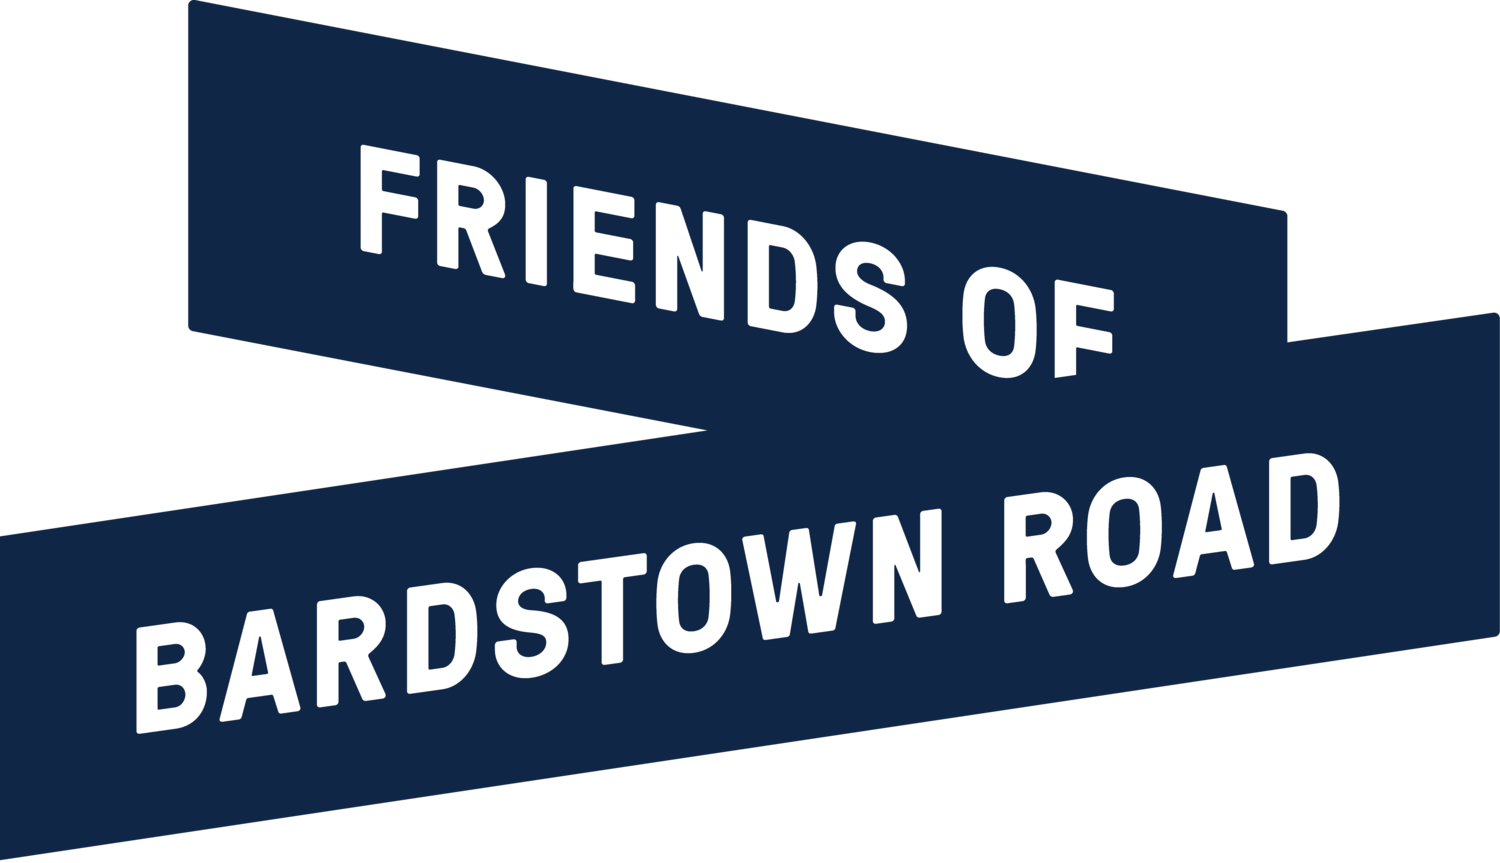 Friends of Bardstown Road